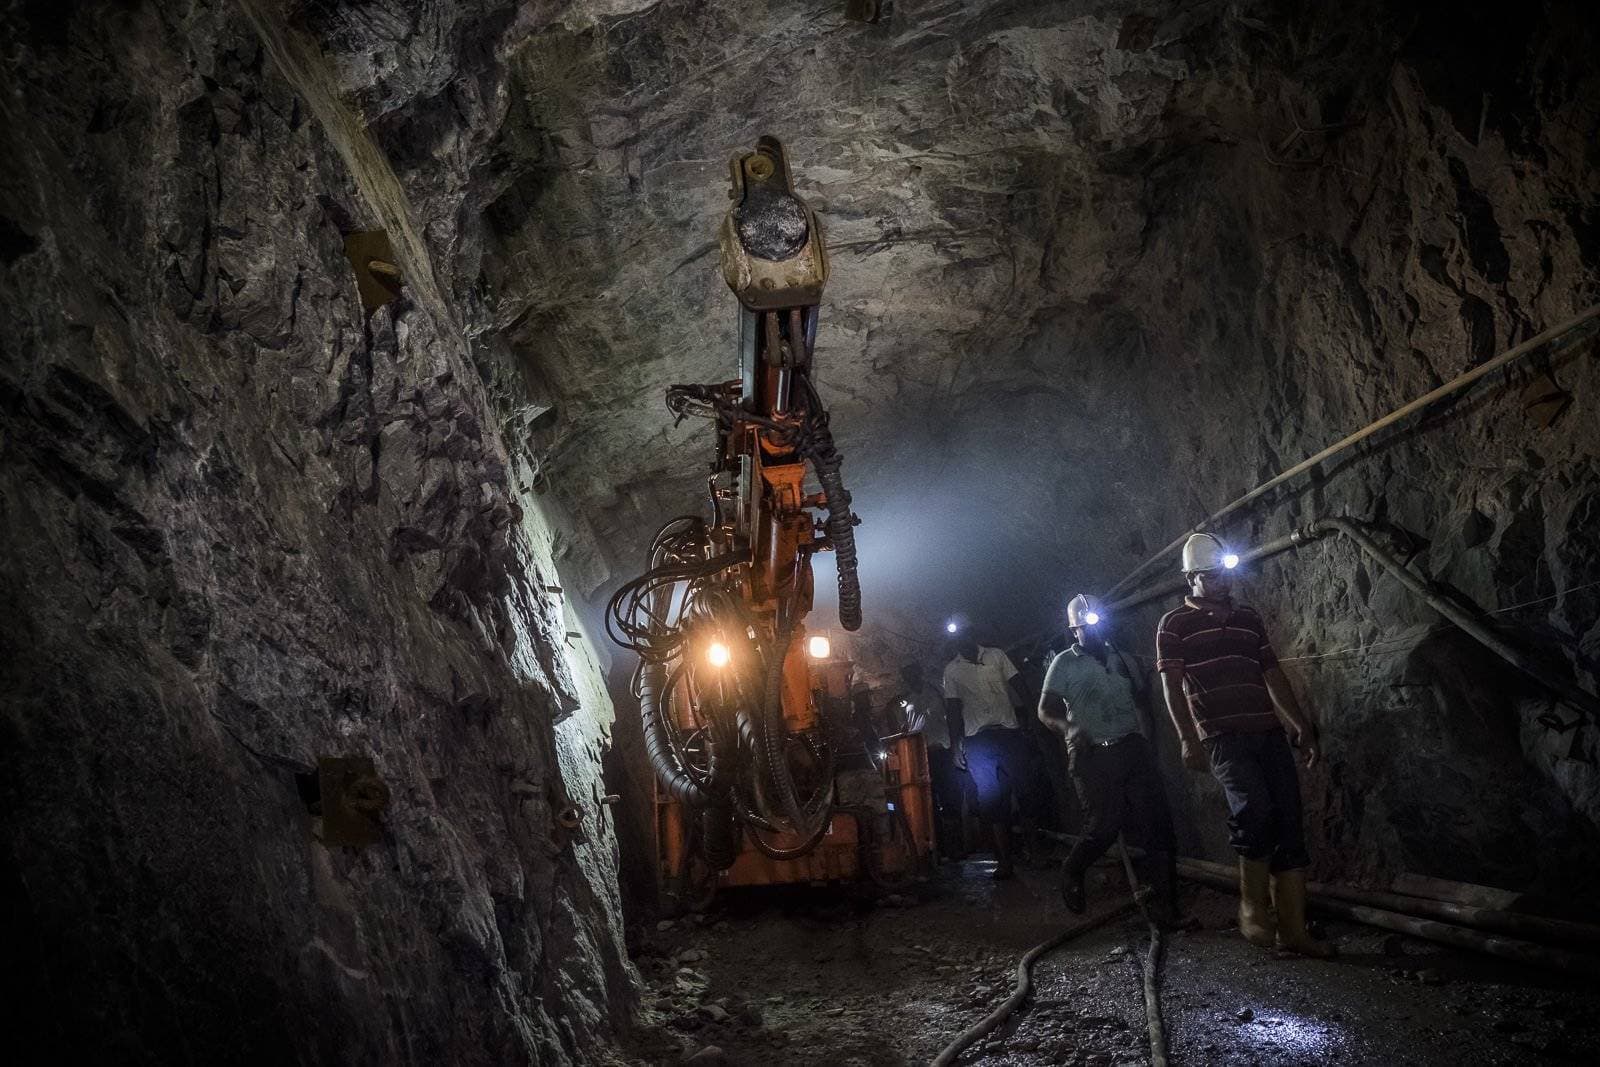 Mining in India